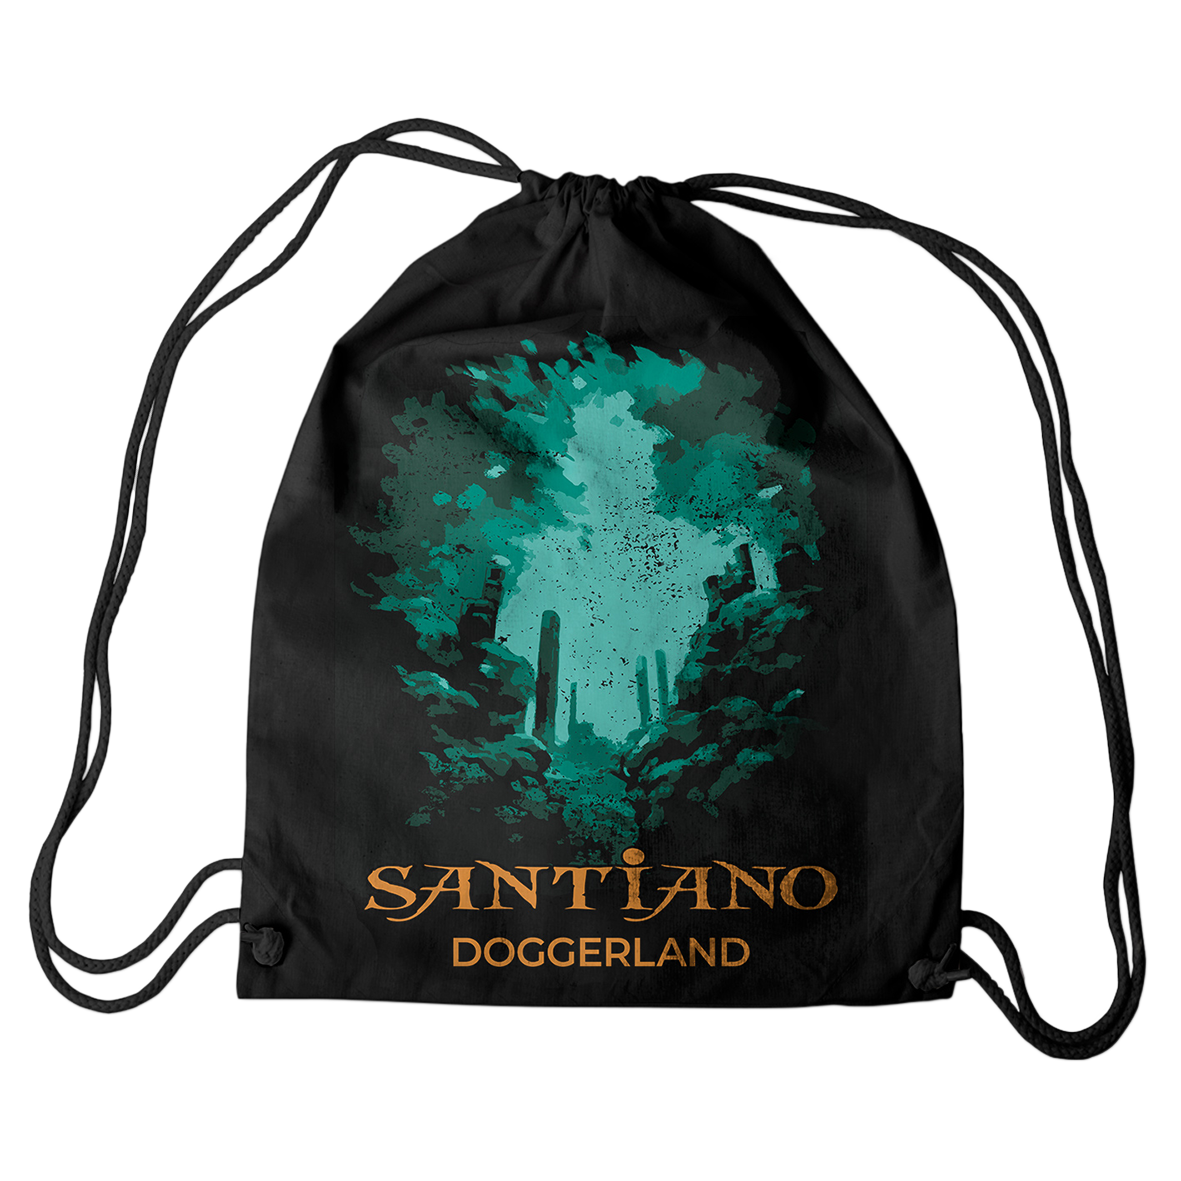 Santiano Match-Bag 'Doggerland'